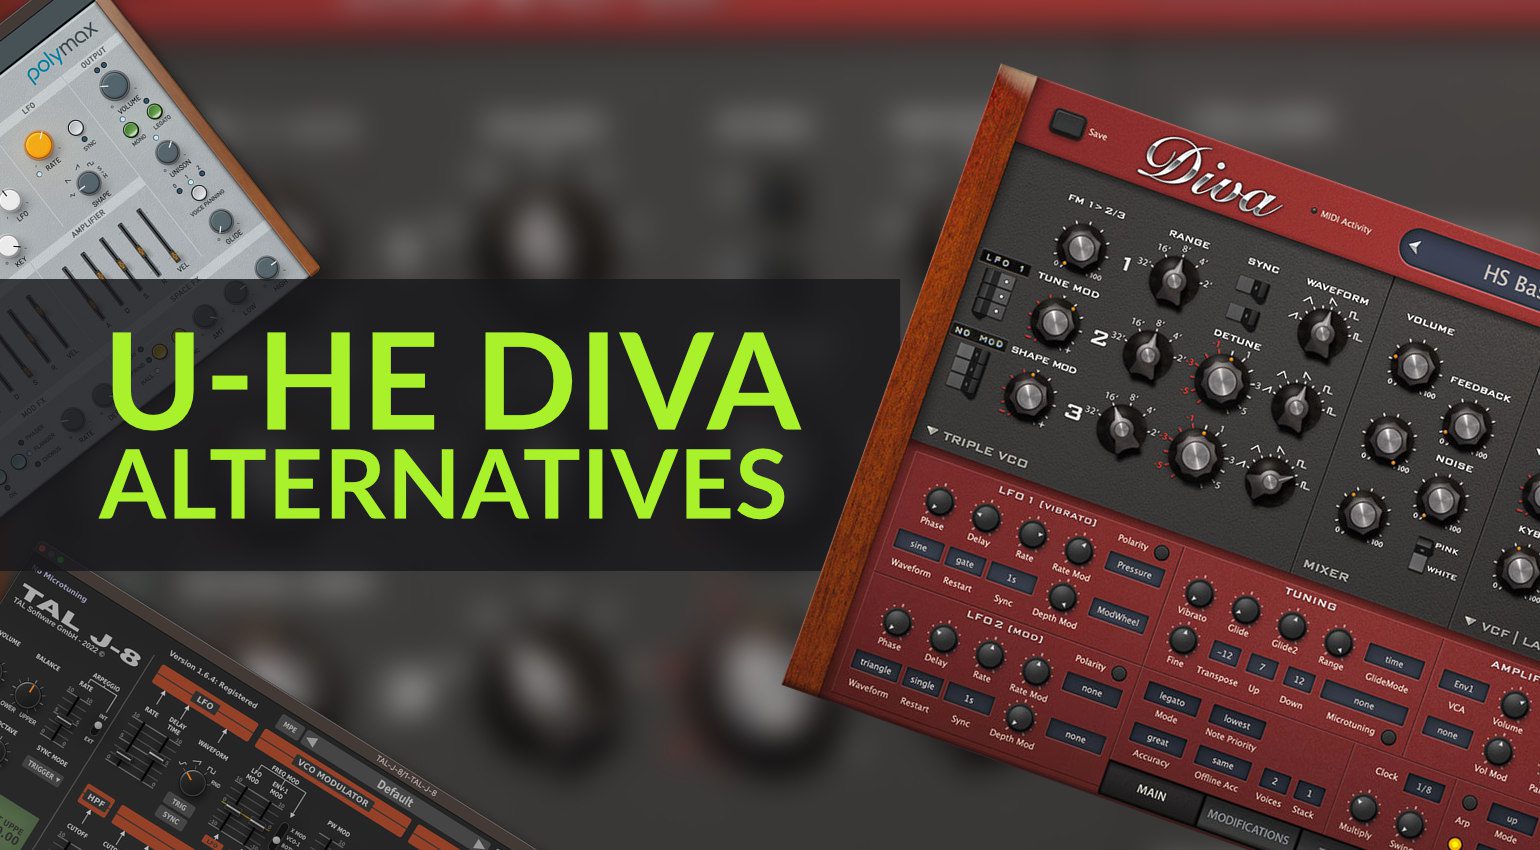 U-he Diva alternatives – The five best epic pads! - gearnews.com